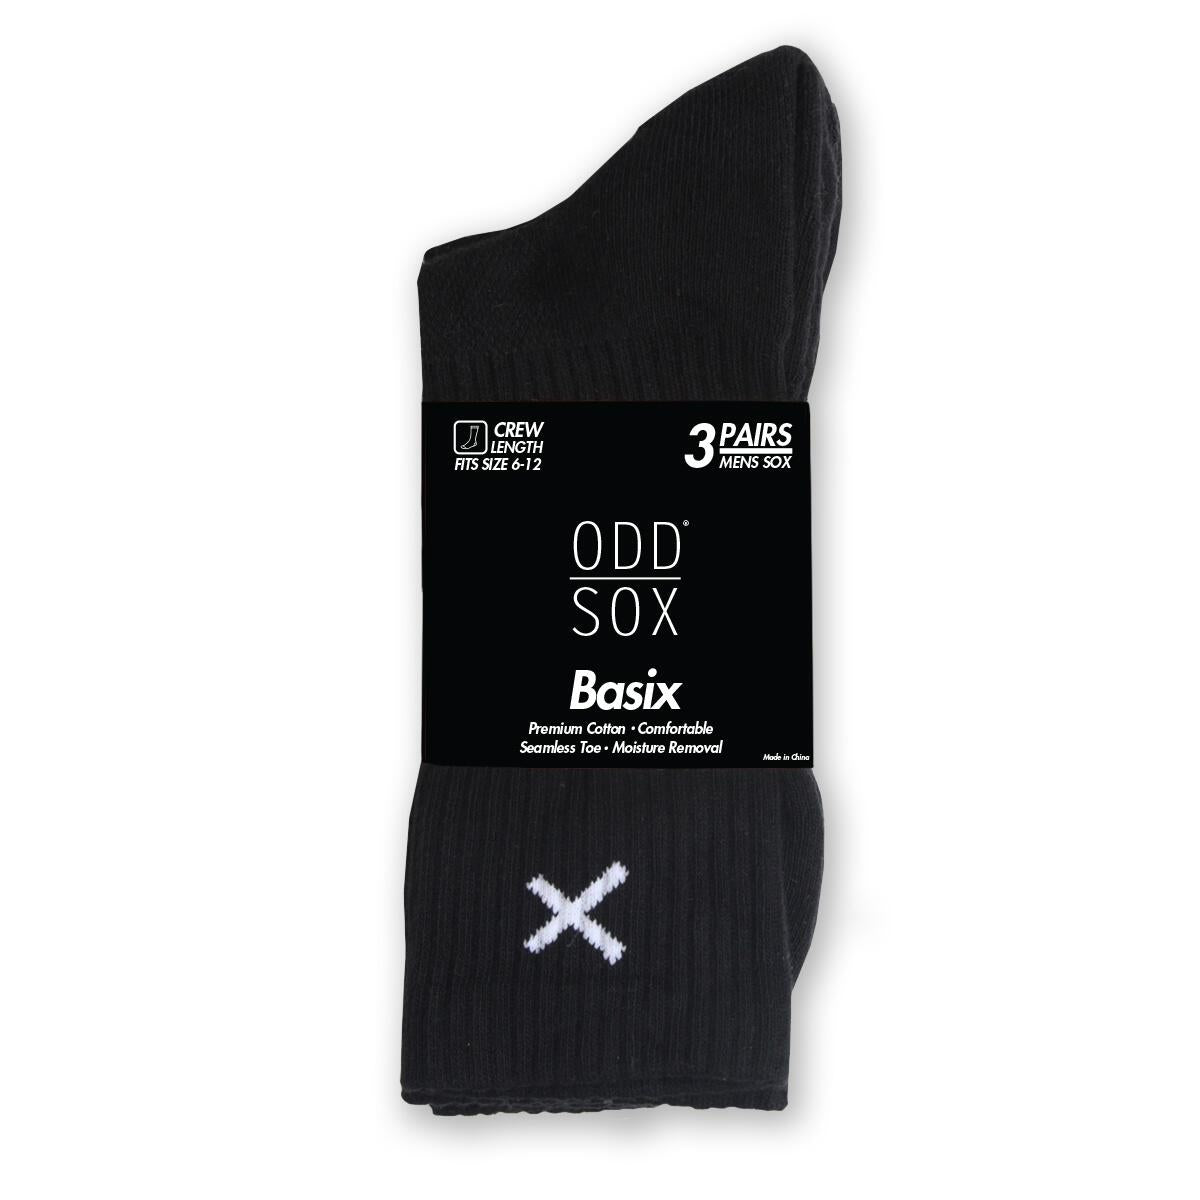 Odd Sox “Basix 3 Pack” Socks (Black)